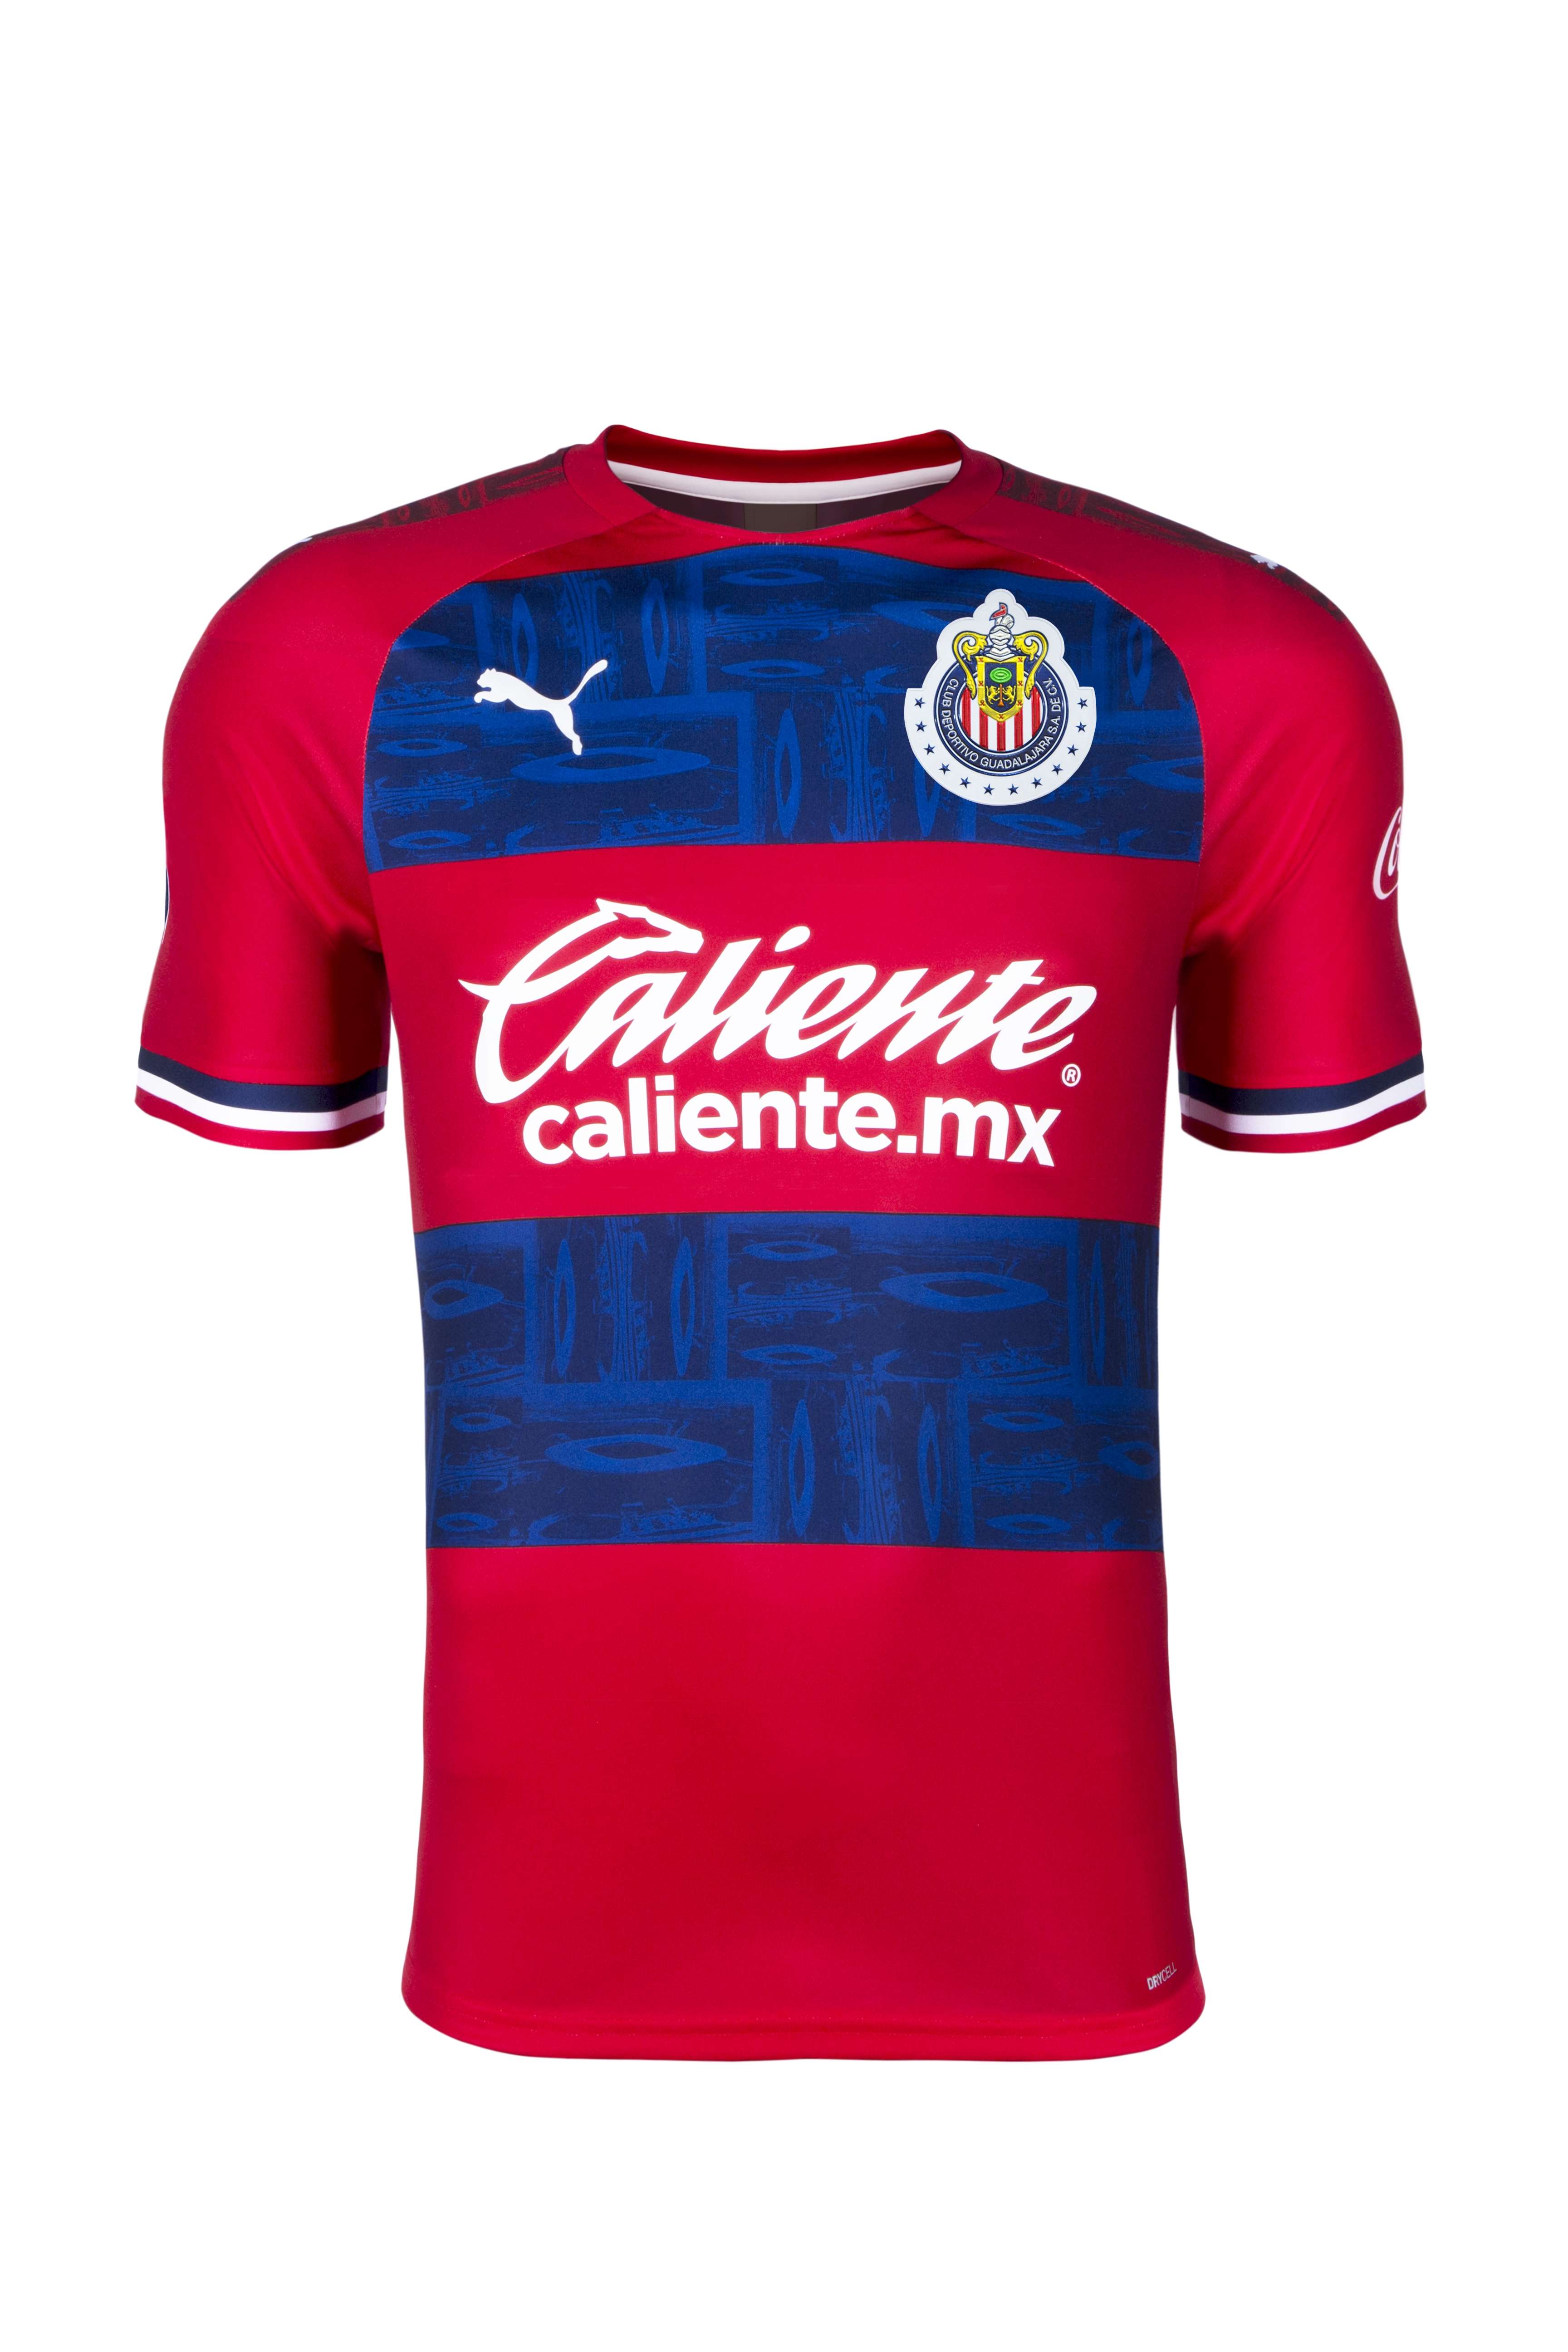 Chivas visitante playera Apertura 2019